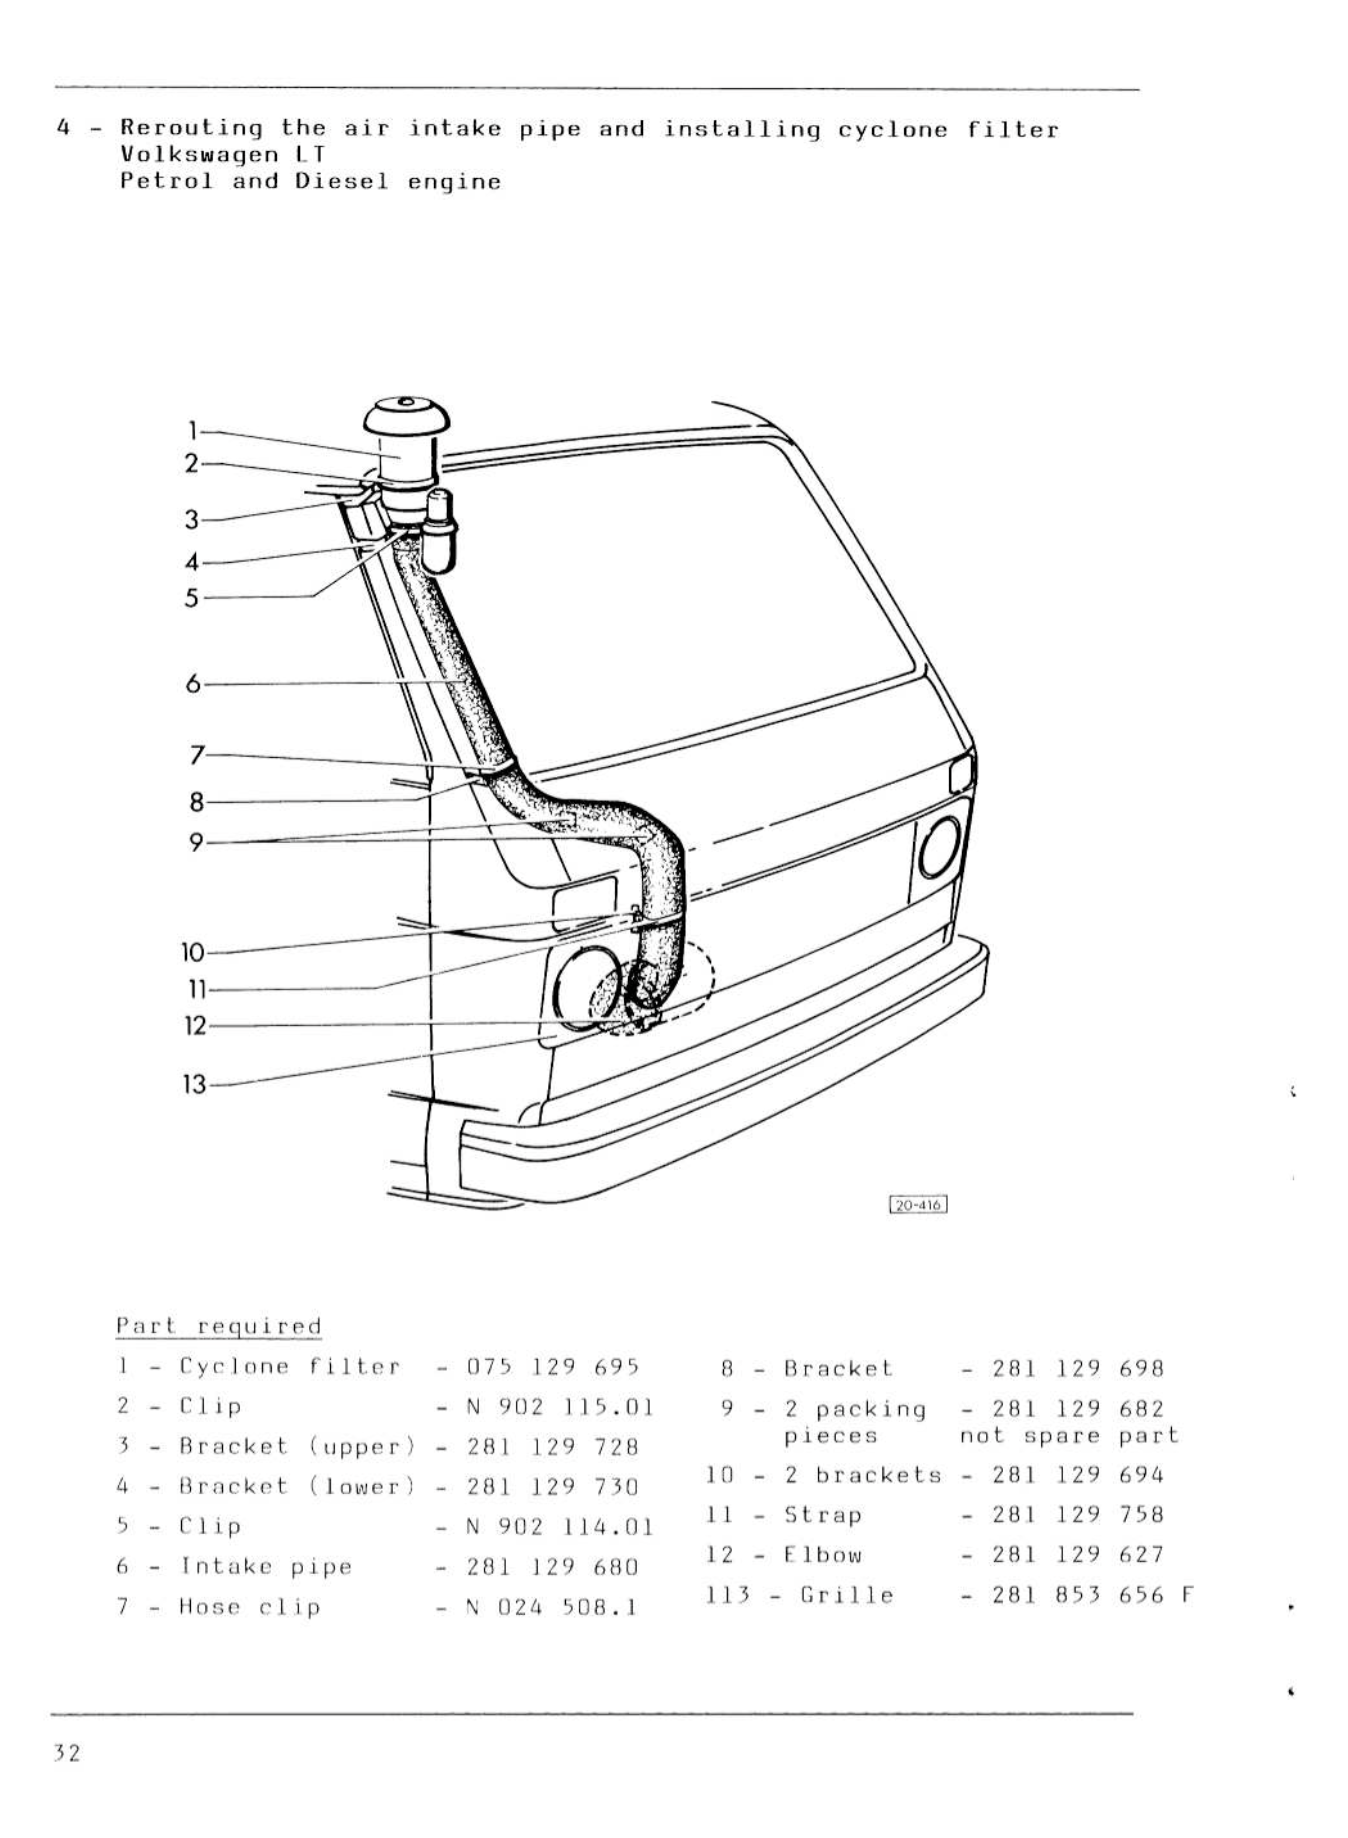 Volkswagen LT MK1 Snorkel Kit 4x4 1:1 reproduction of original